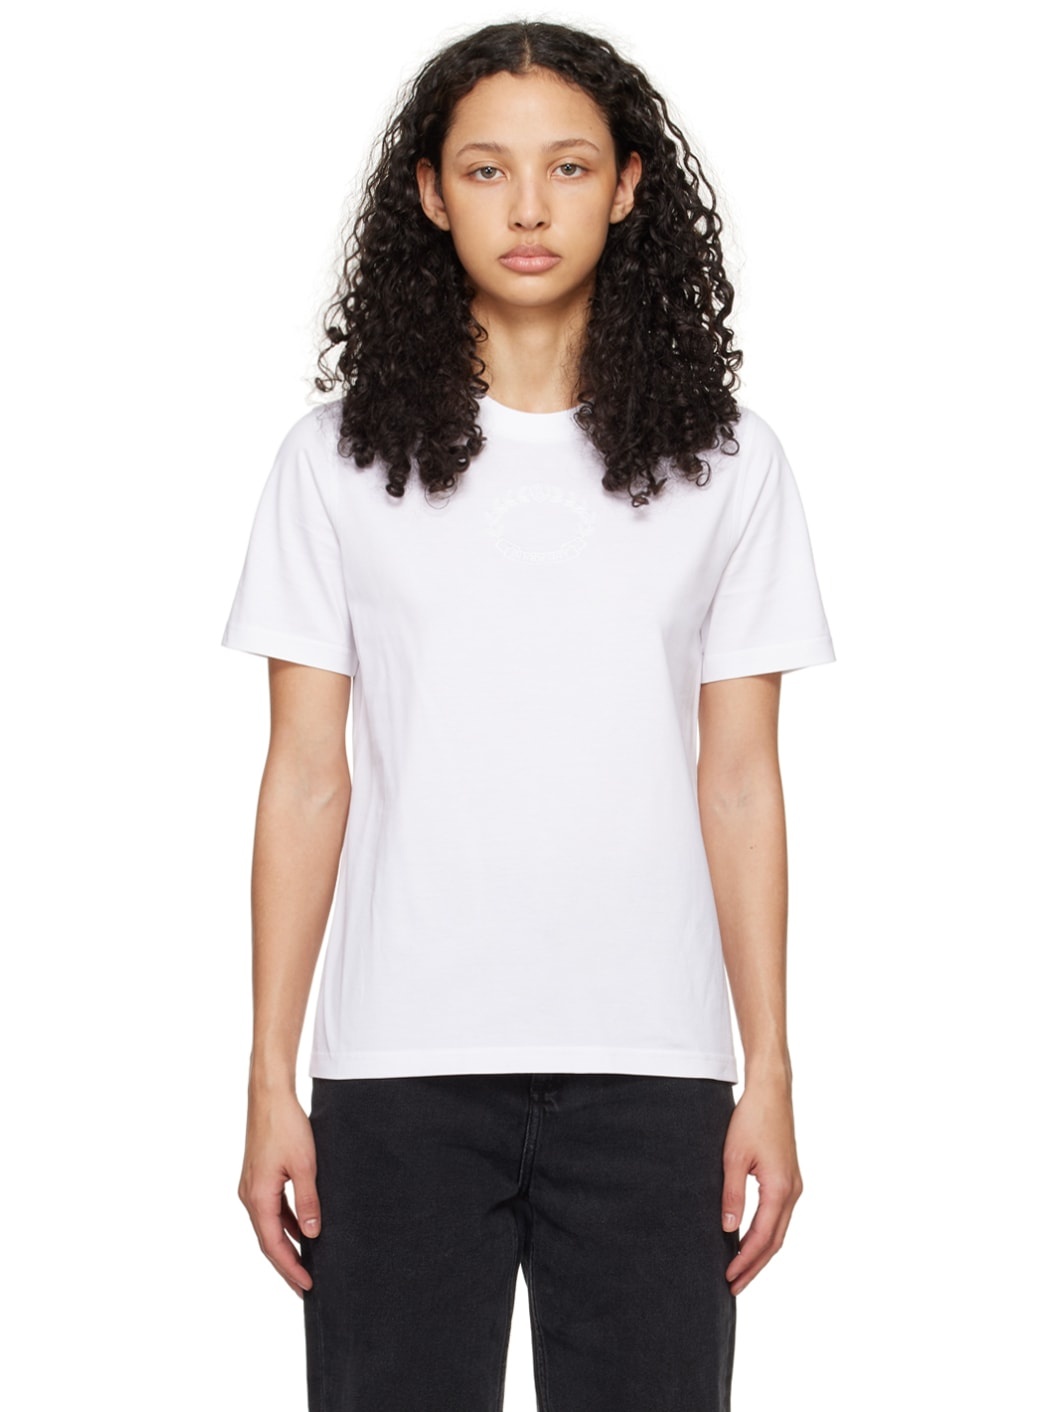 White Oak Leaf Crest T-Shirt - 1